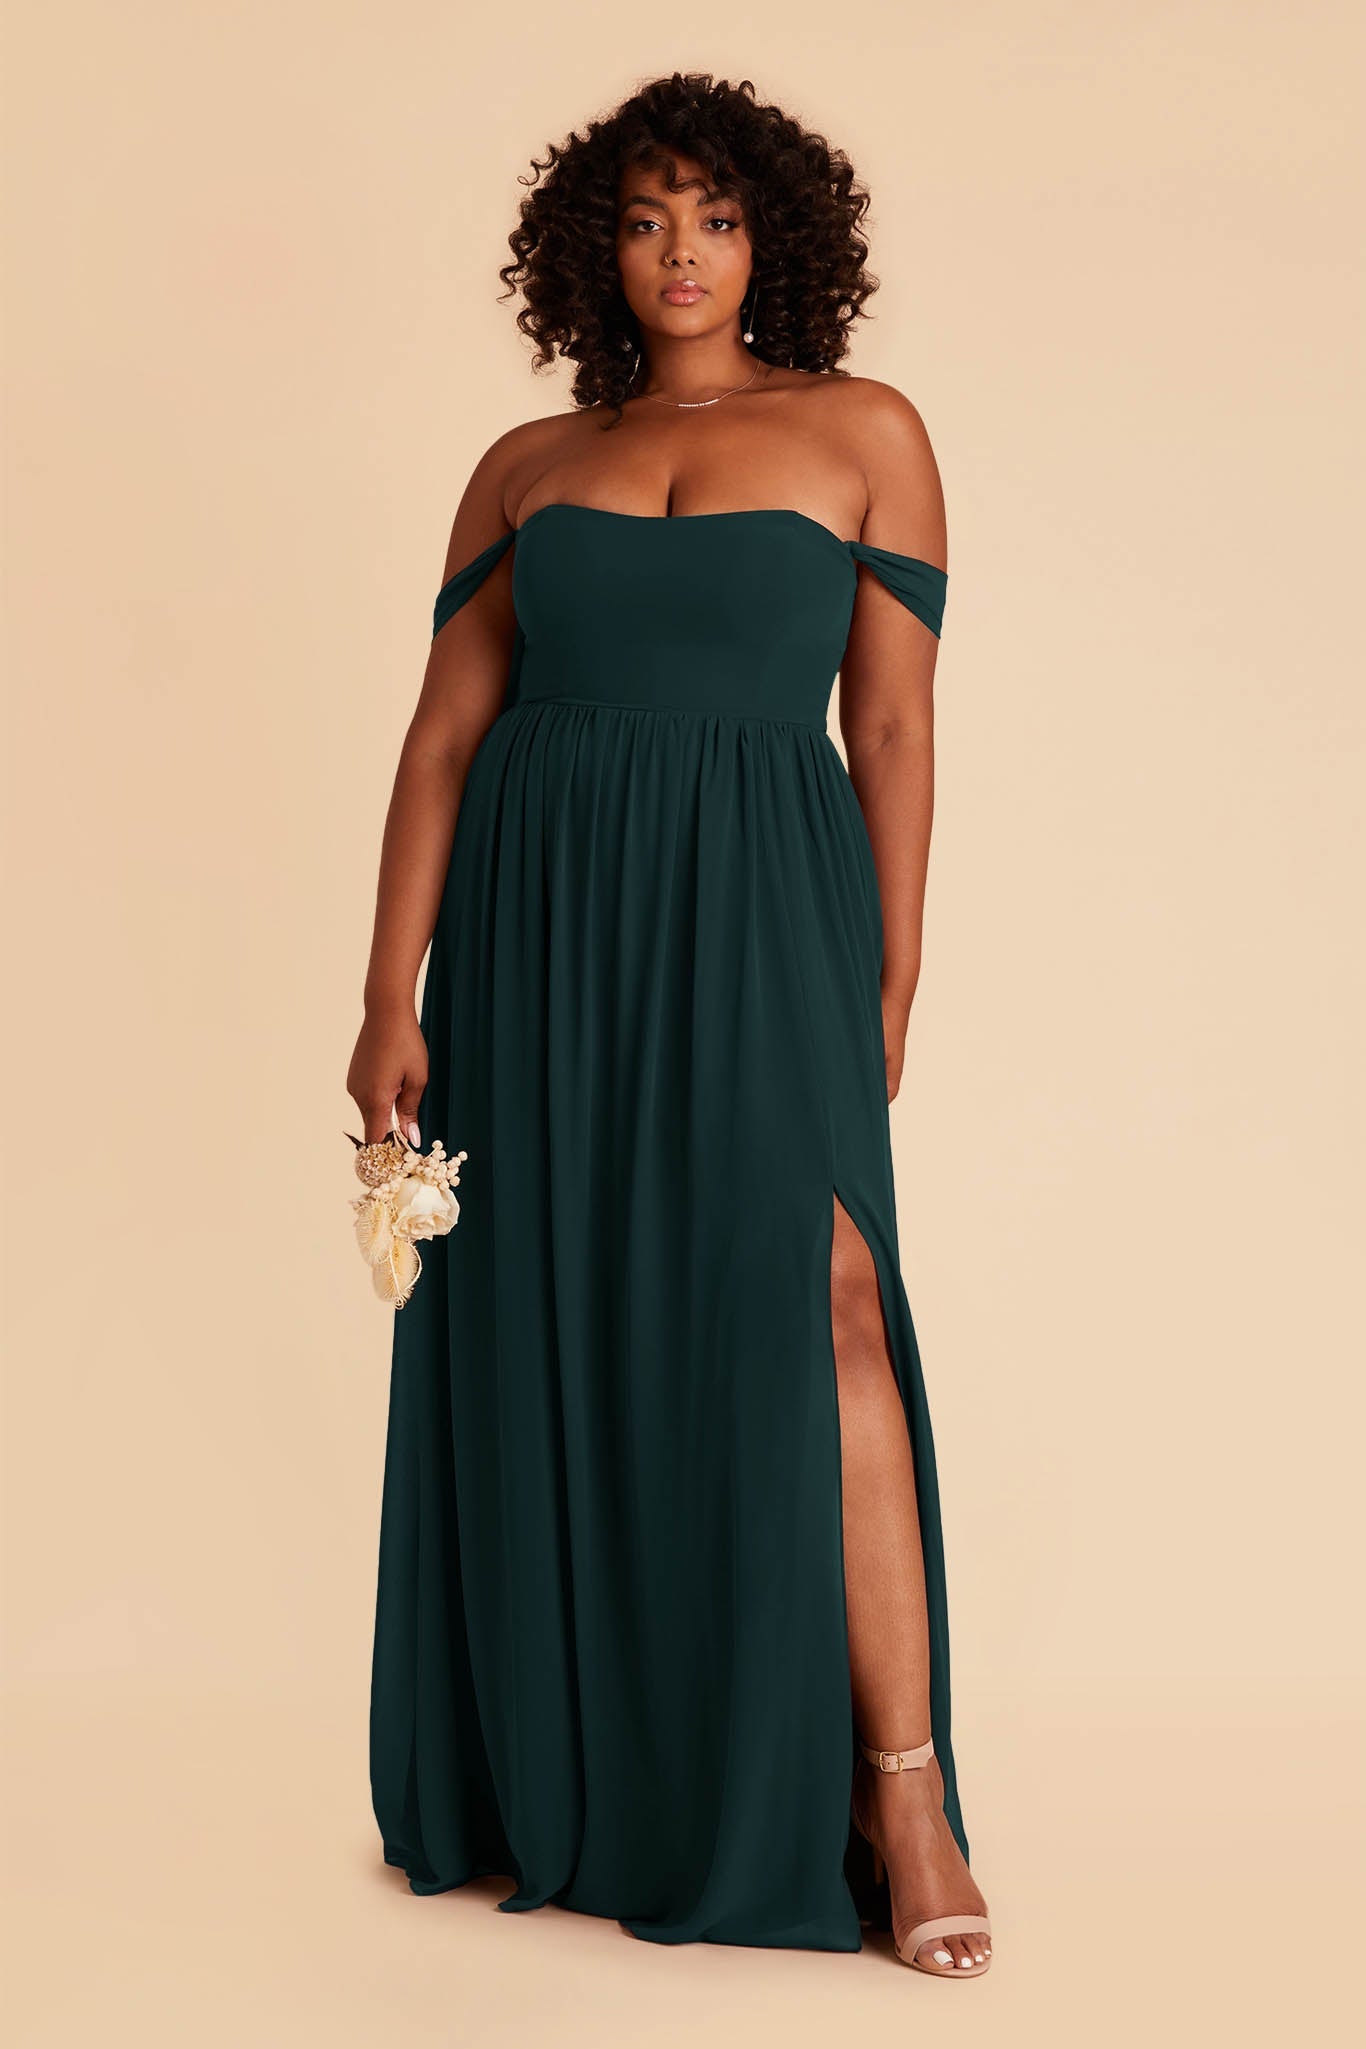 August Convertible Emerald Bridesmaid Dress